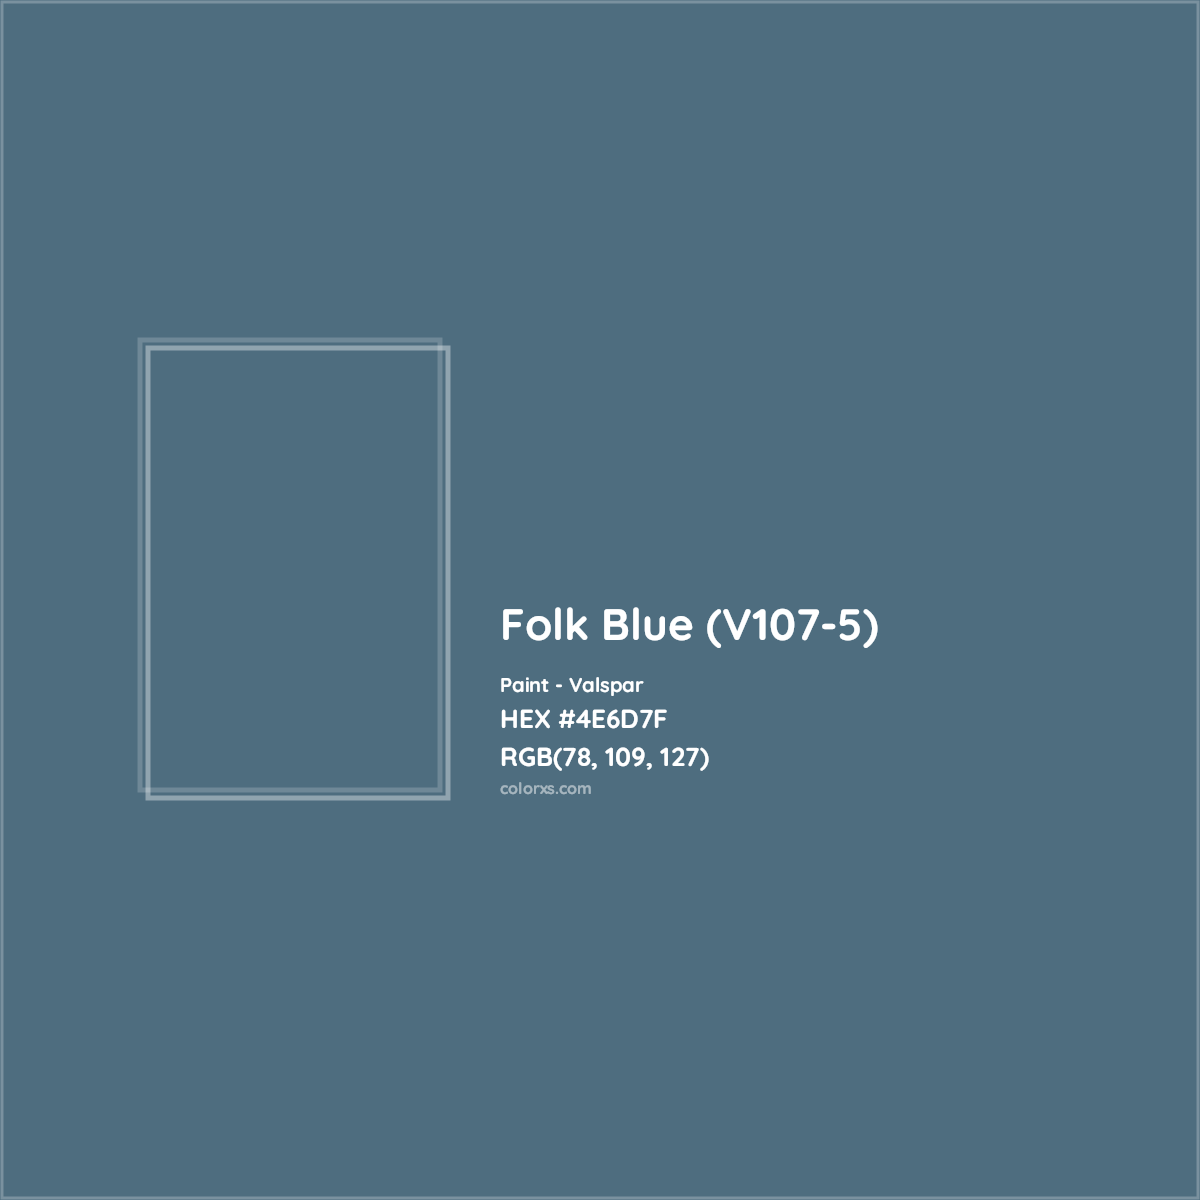 HEX #4E6D7F Folk Blue (V107-5) Paint Valspar - Color Code